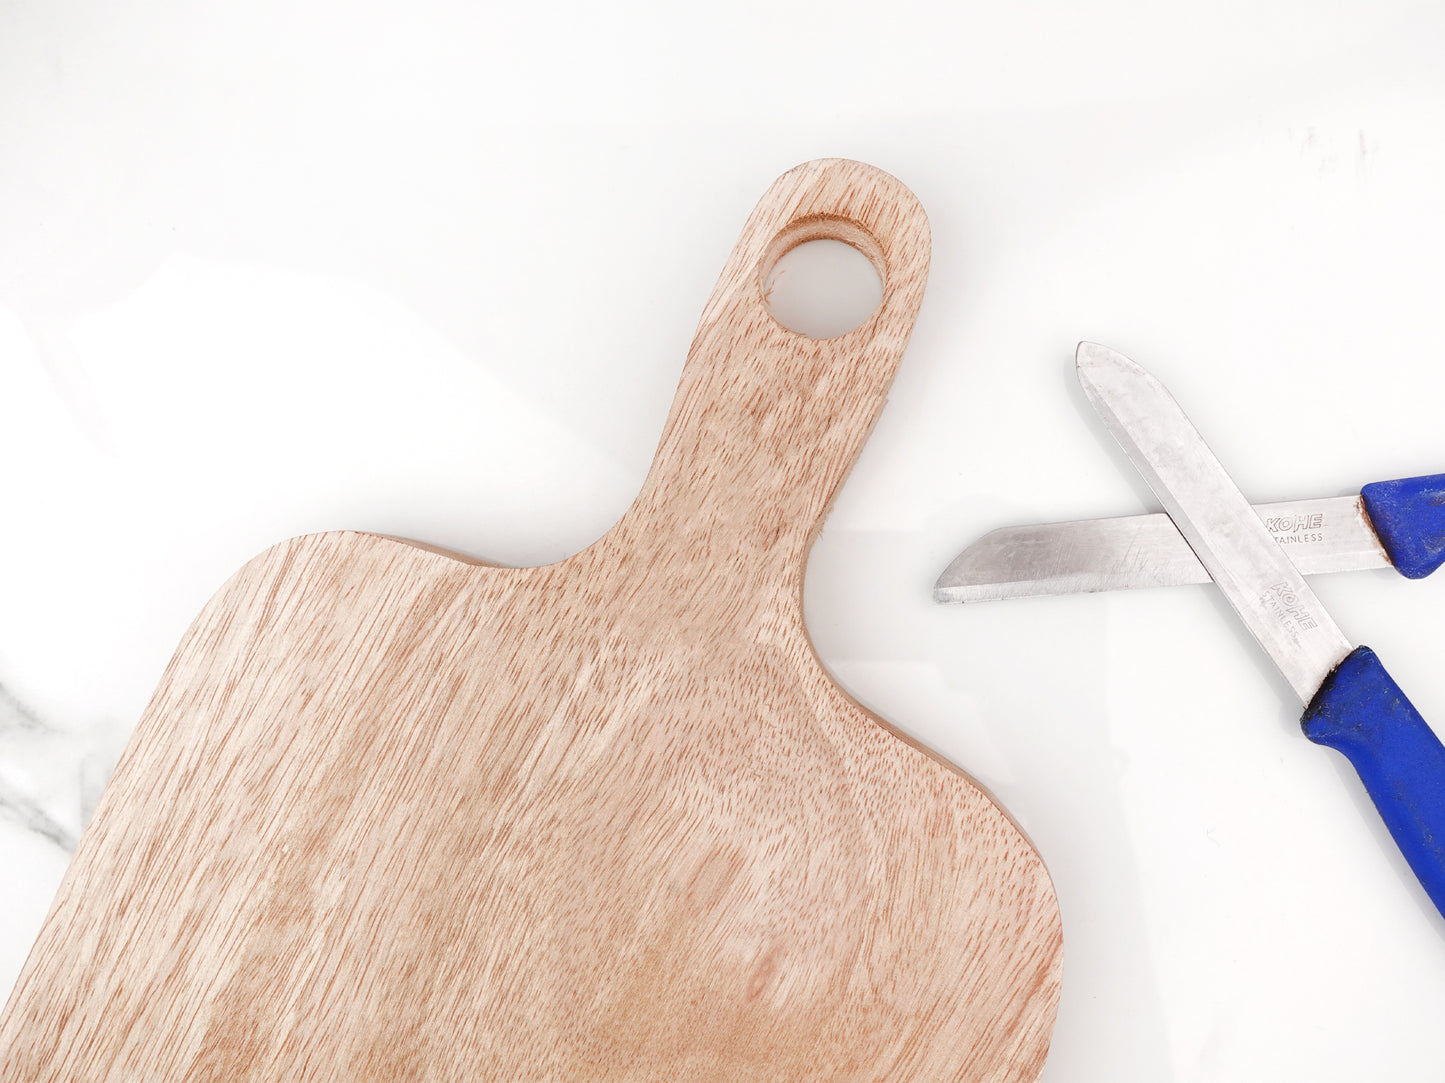 Chopping Board - Wooden - Single - Mango Wood - Single Sheet Cut - 16*8 Inch